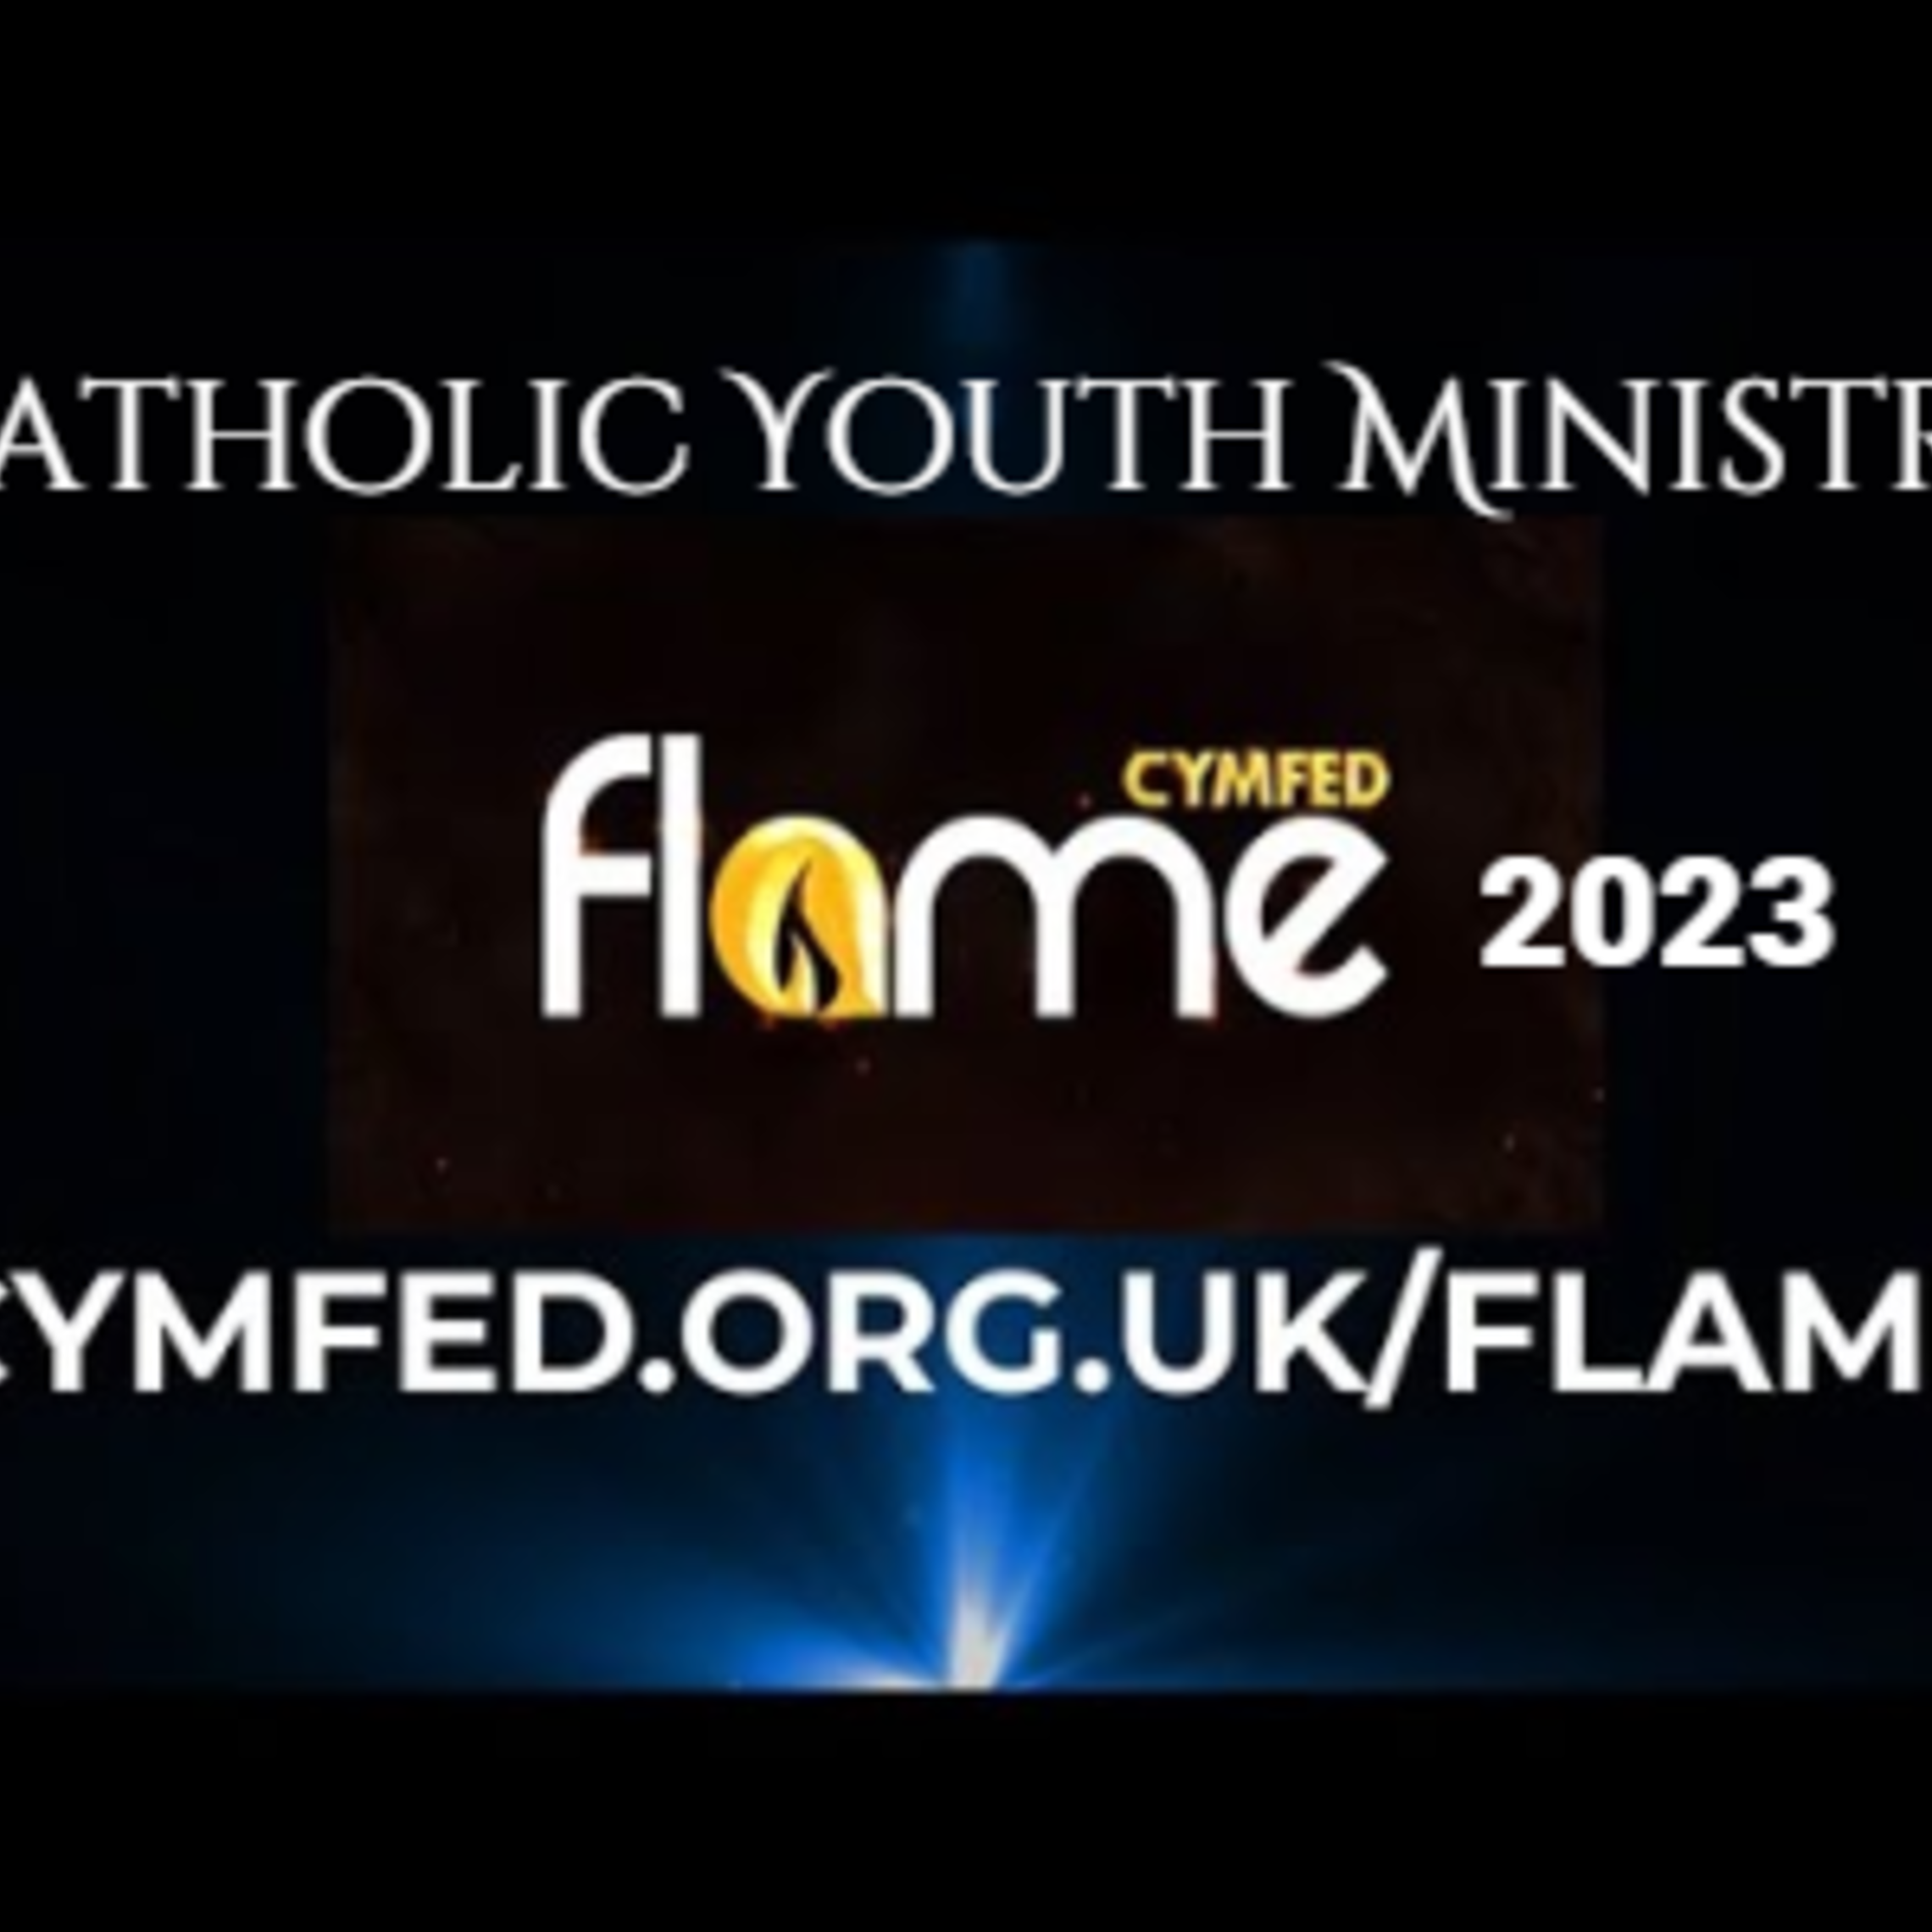 Flame 2023